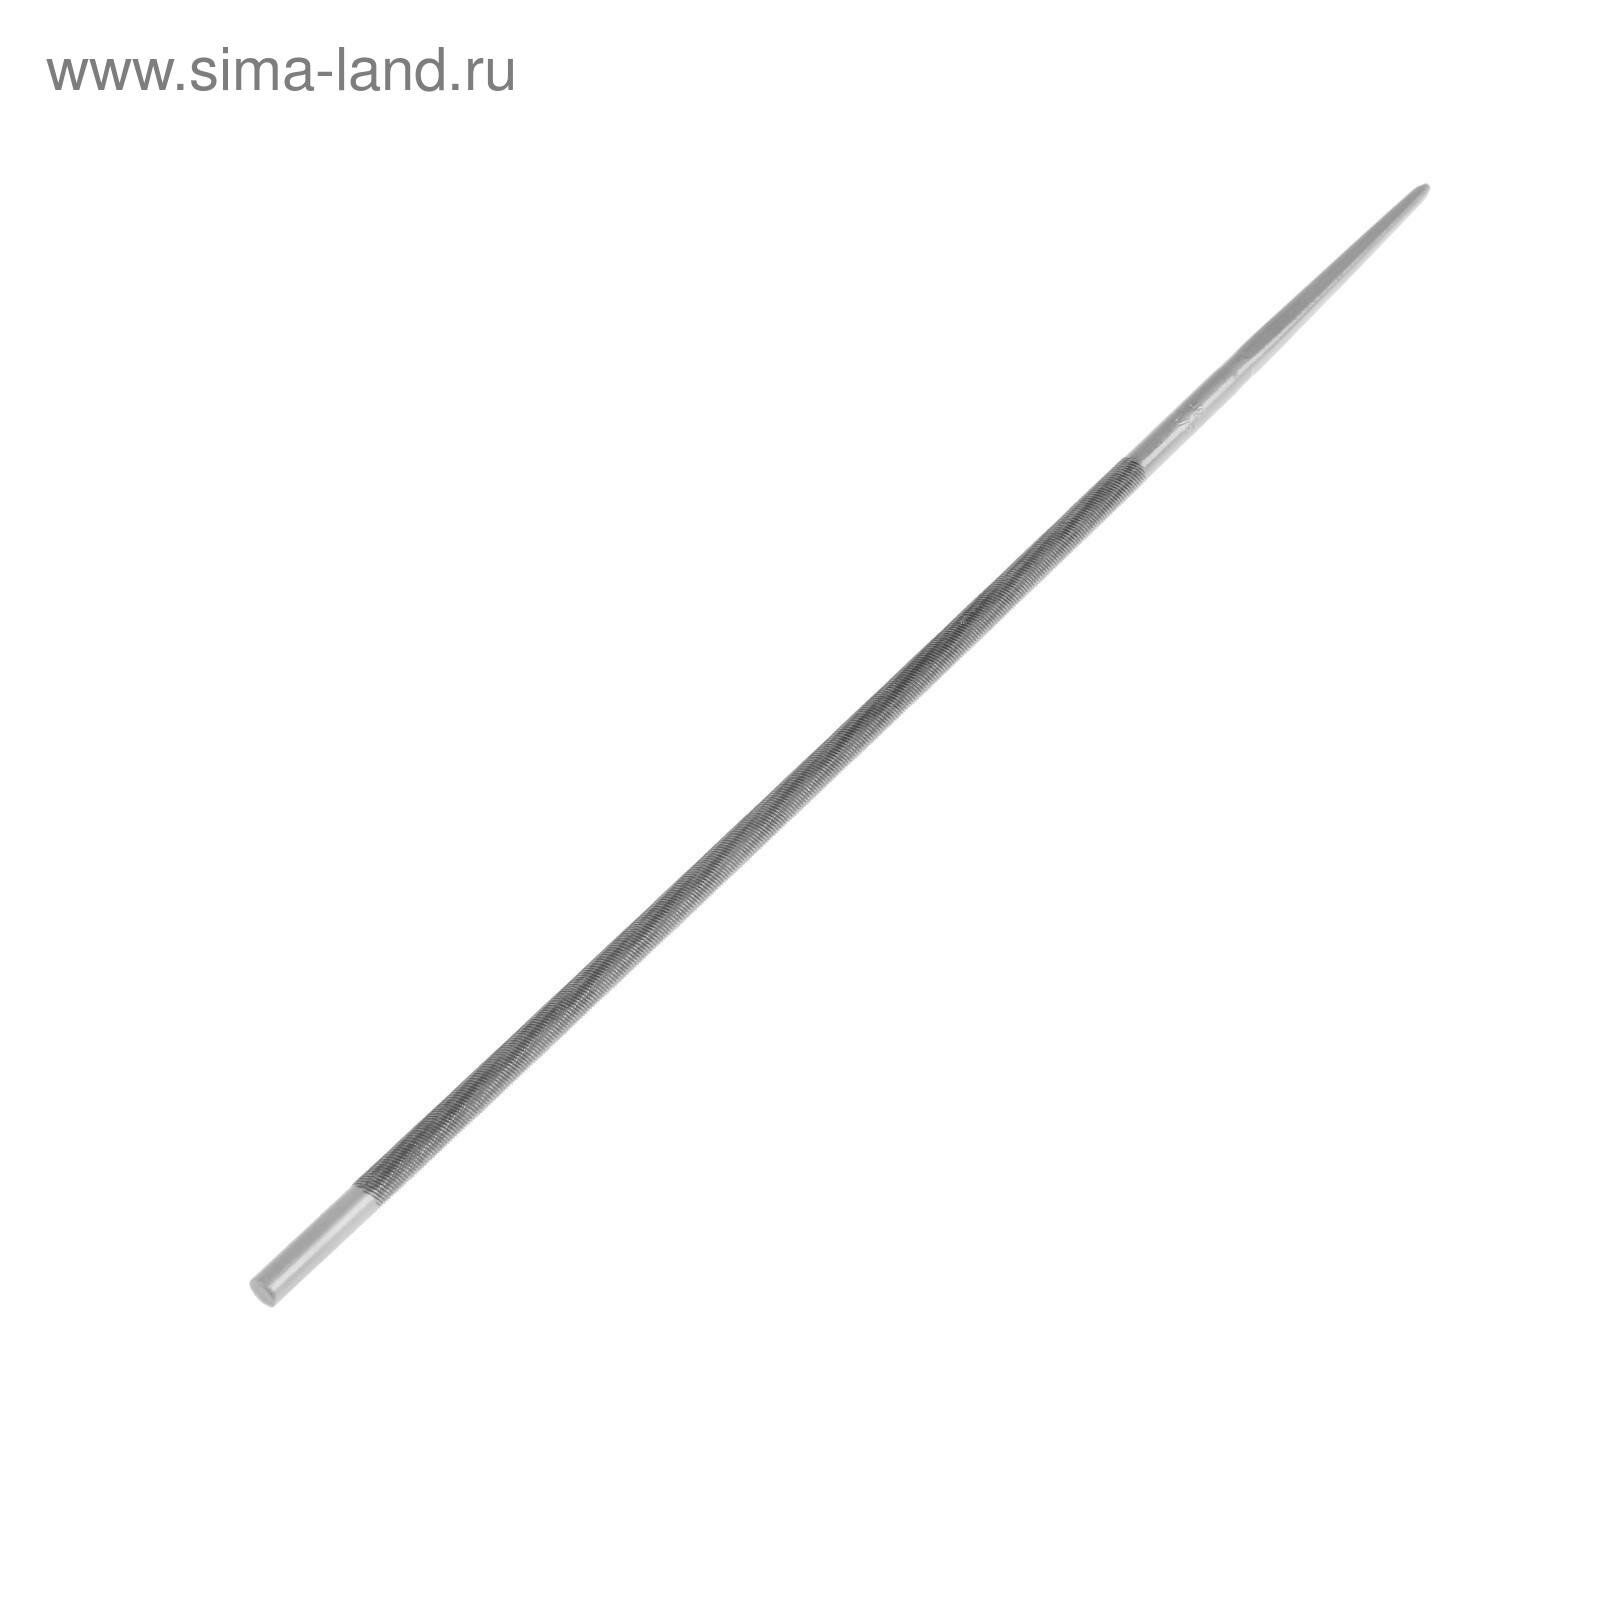 Напильник тундра, для заточки цепей шаг 0.325", круглый, сталь ШХ15, d=4.8 мм, №3, 200 мм (1шт.)